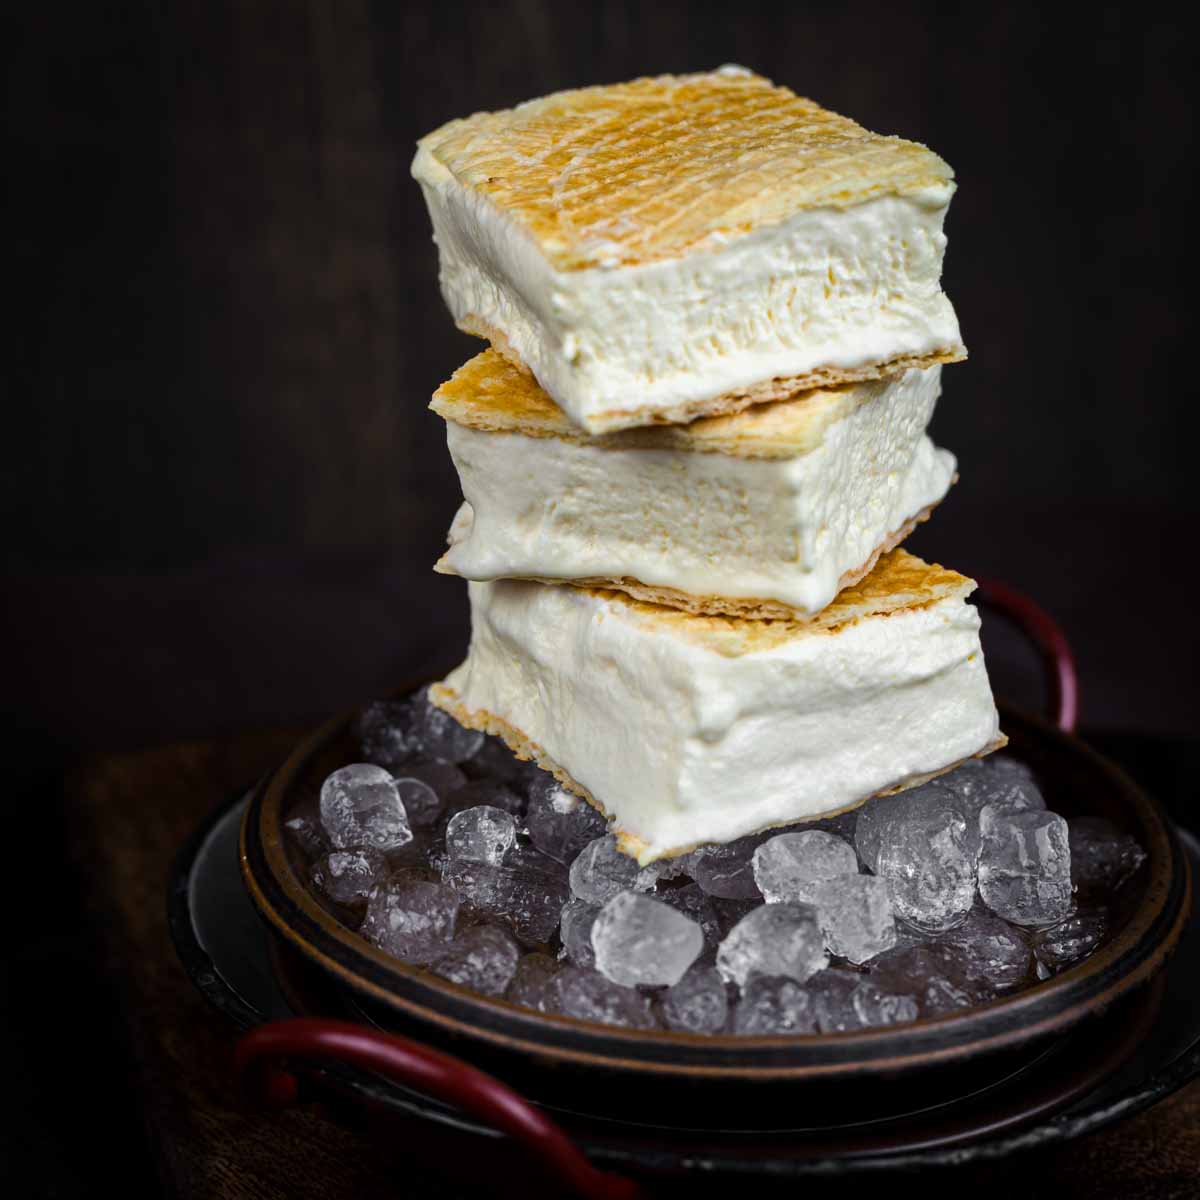 Sugar-Free Ice Cream Sandwich on a dark plate with ice cubes